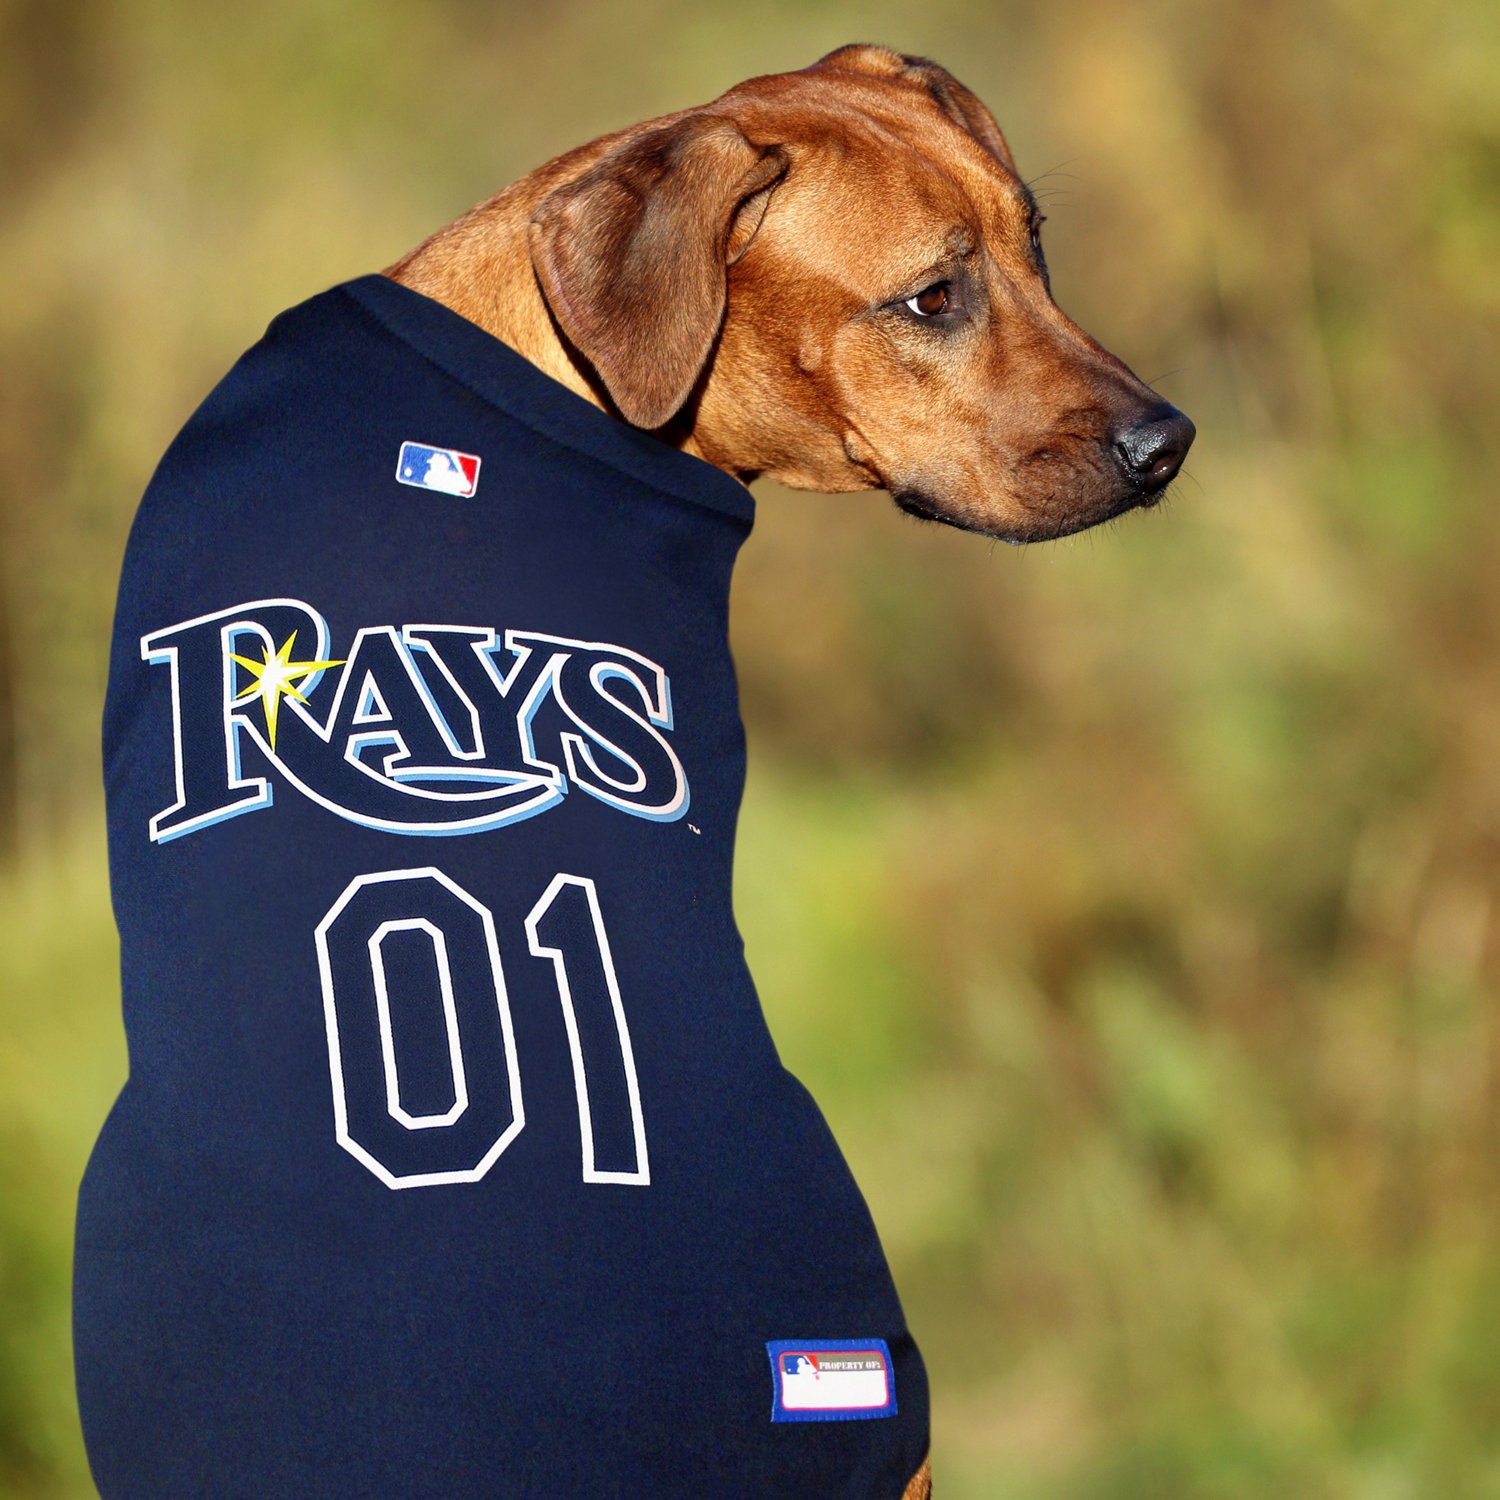 Tampa Bay Rays Pet Dog Collar